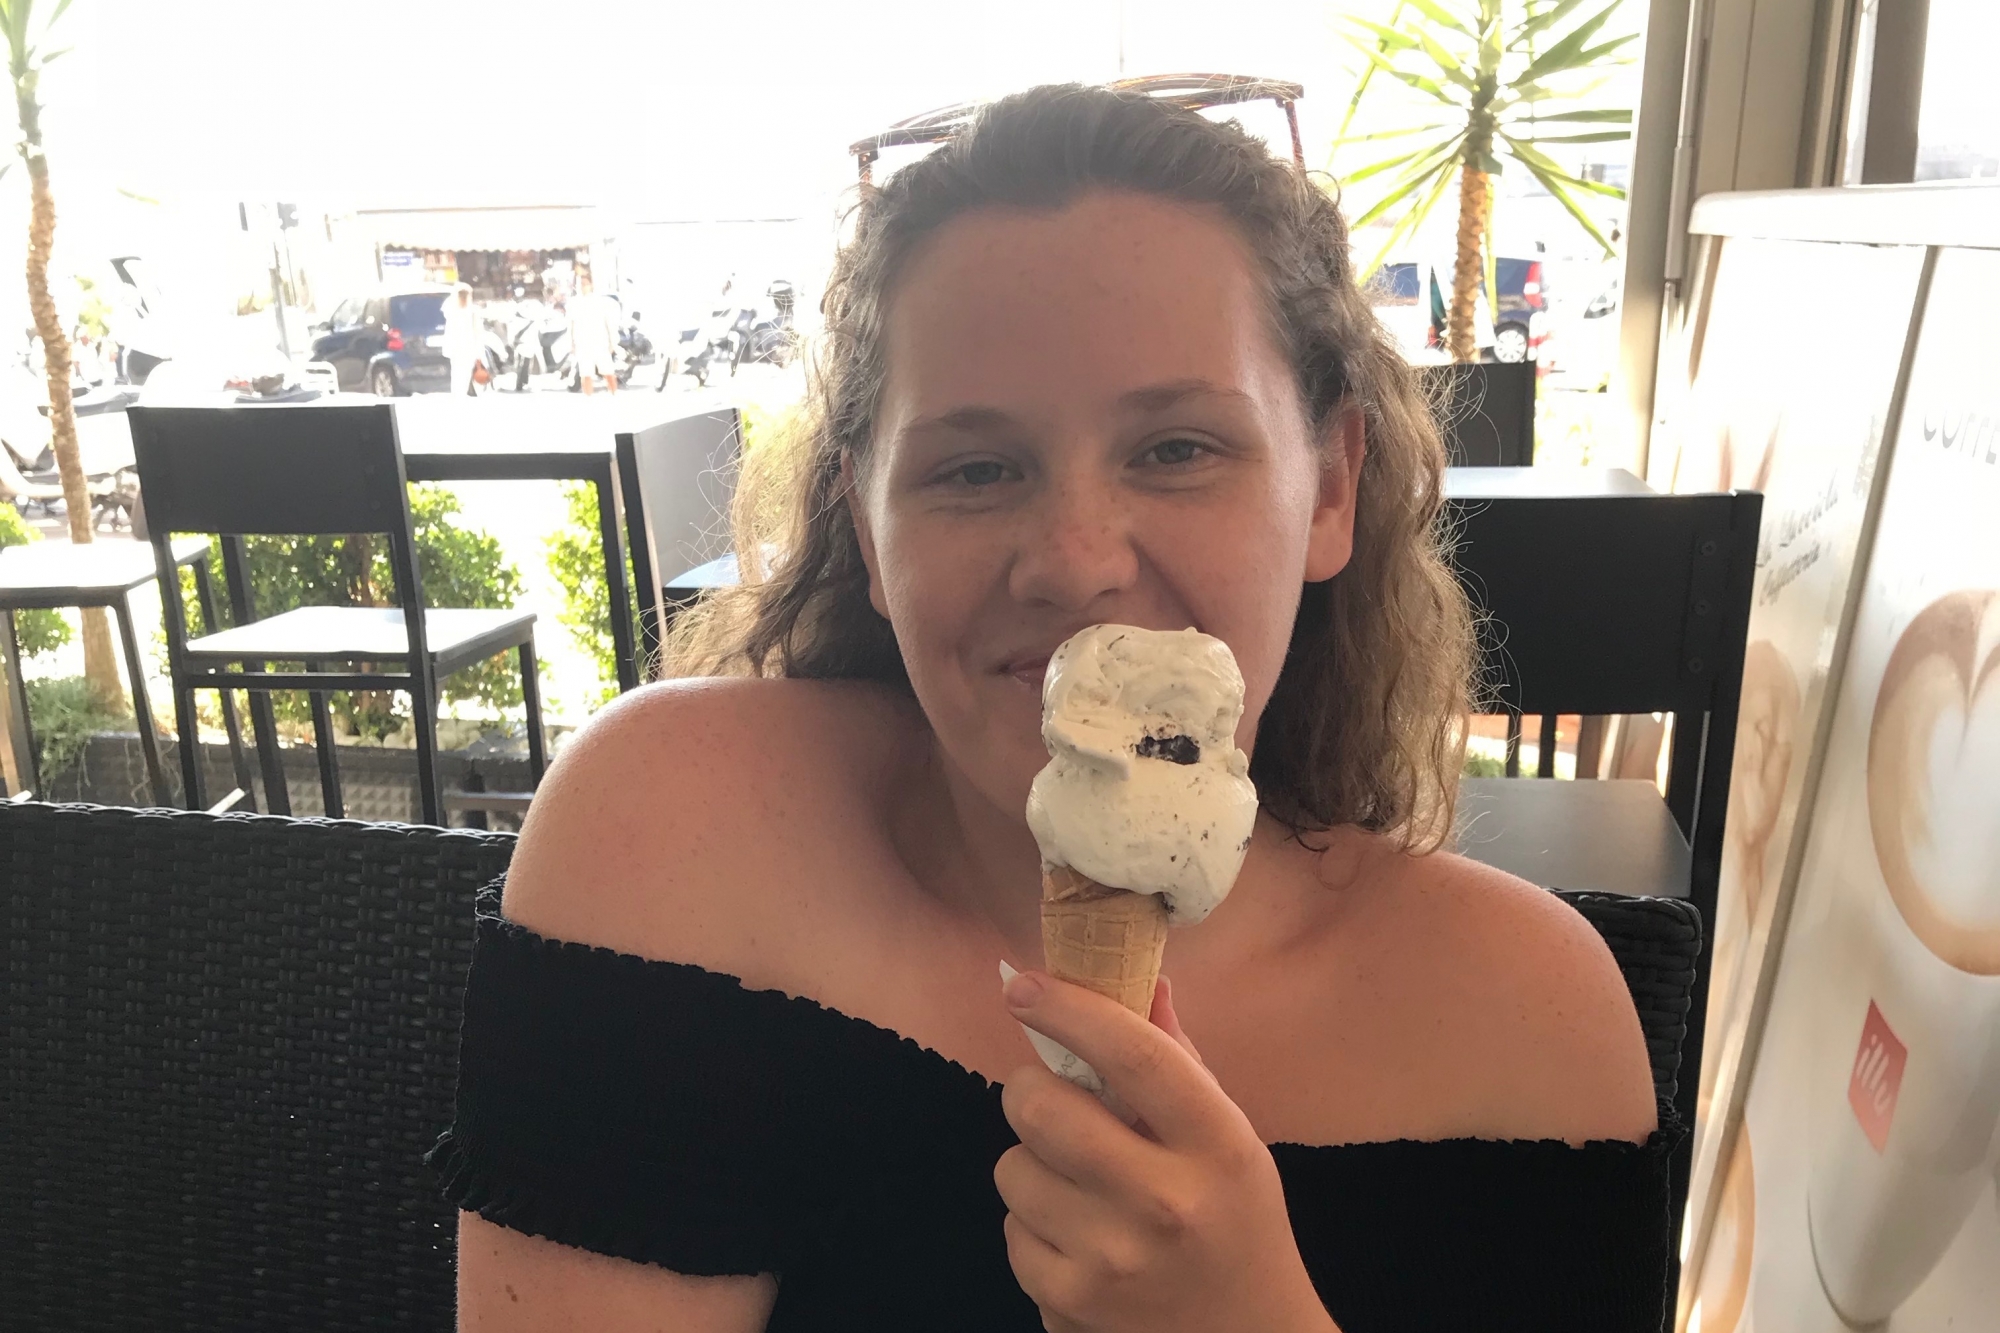 Picture of student Sondra eating ice cream